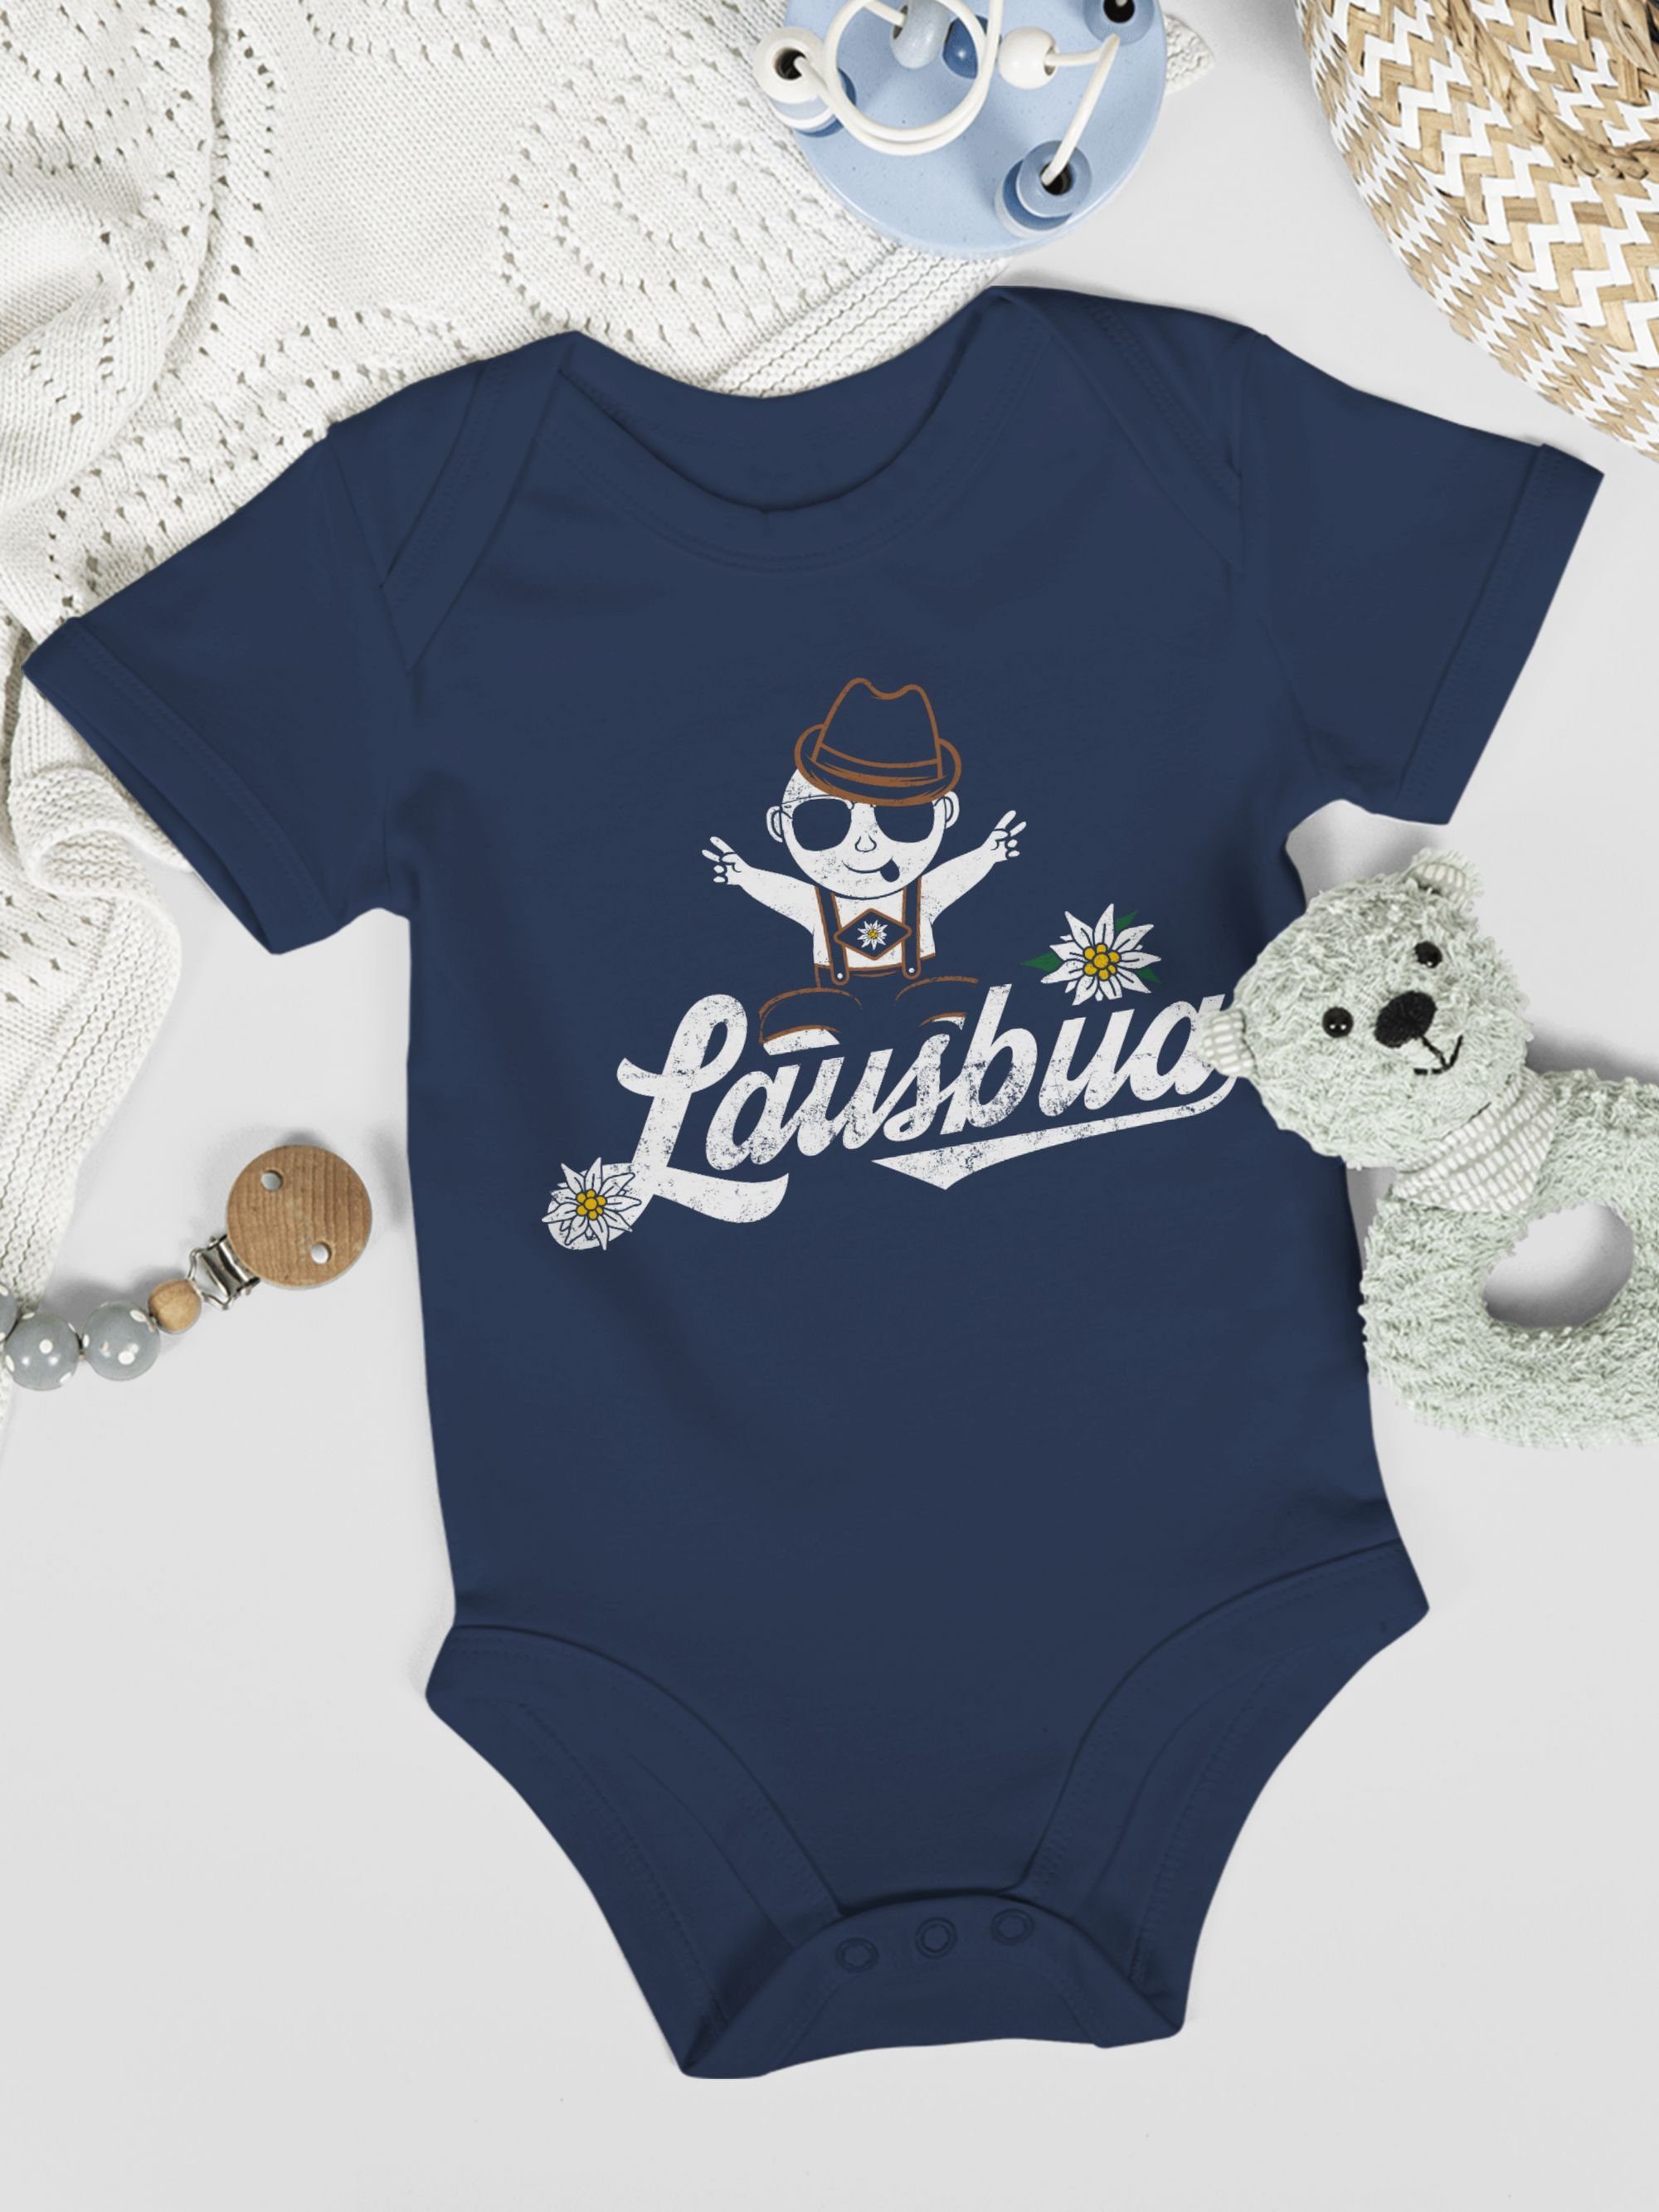 Shirtracer I Navy Witzig Baby Lausbua für Oktoberfest Mode Outfit Wiesn Lustig Blau 1 Shirtbody Baby